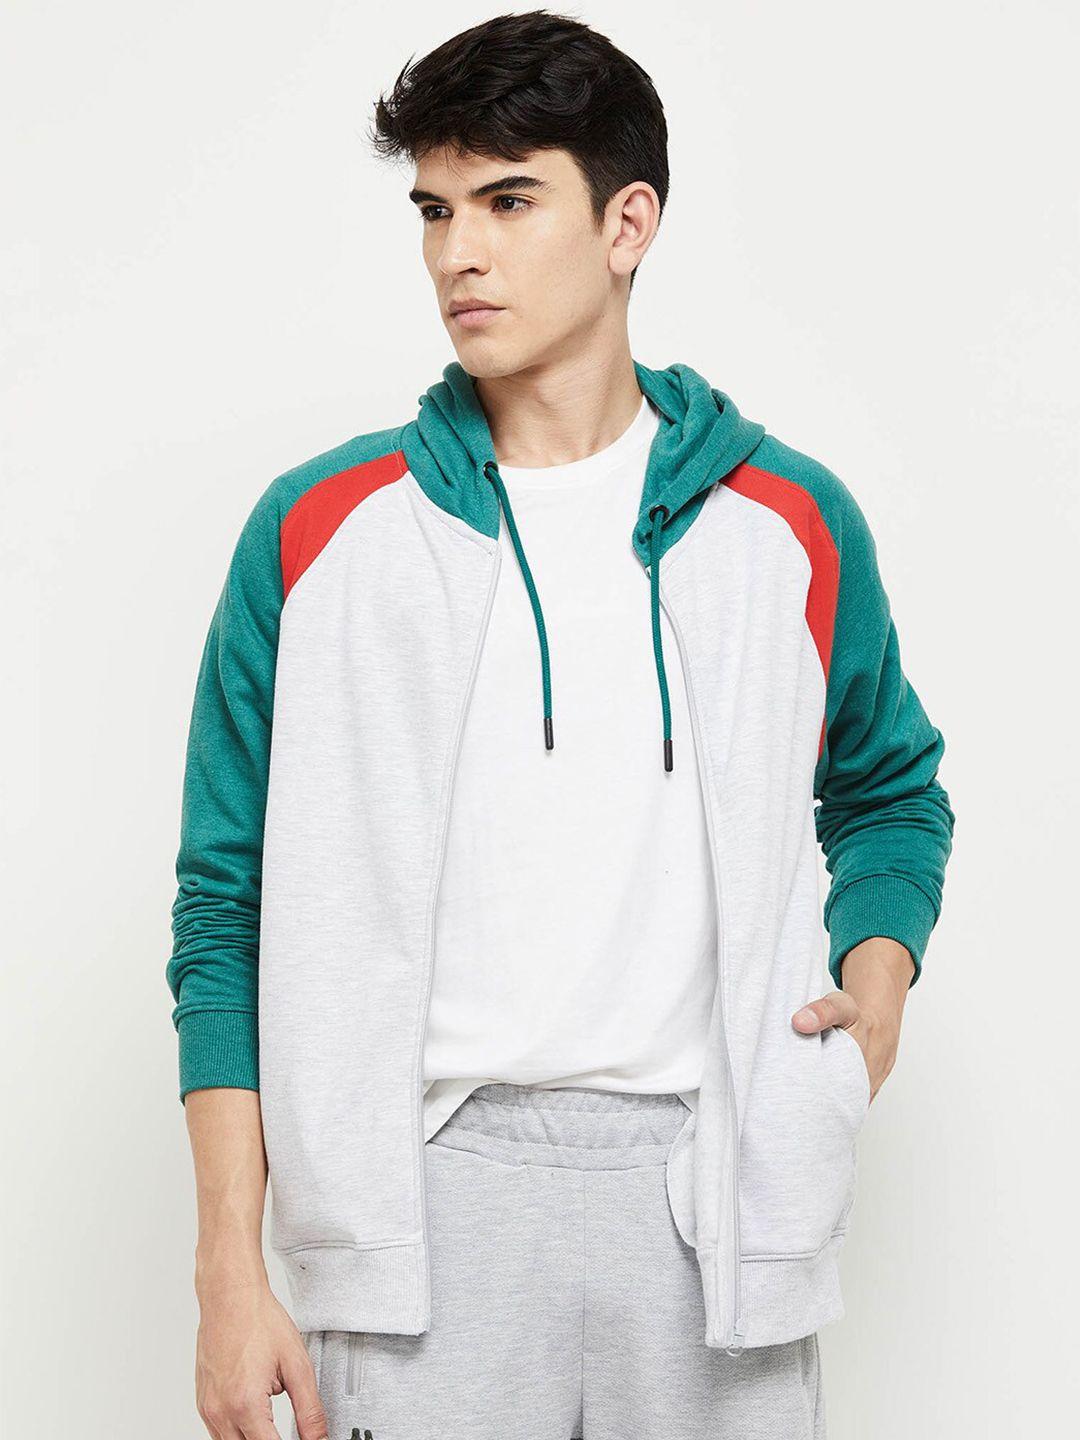 max-men-green-hooded-sweatshirt